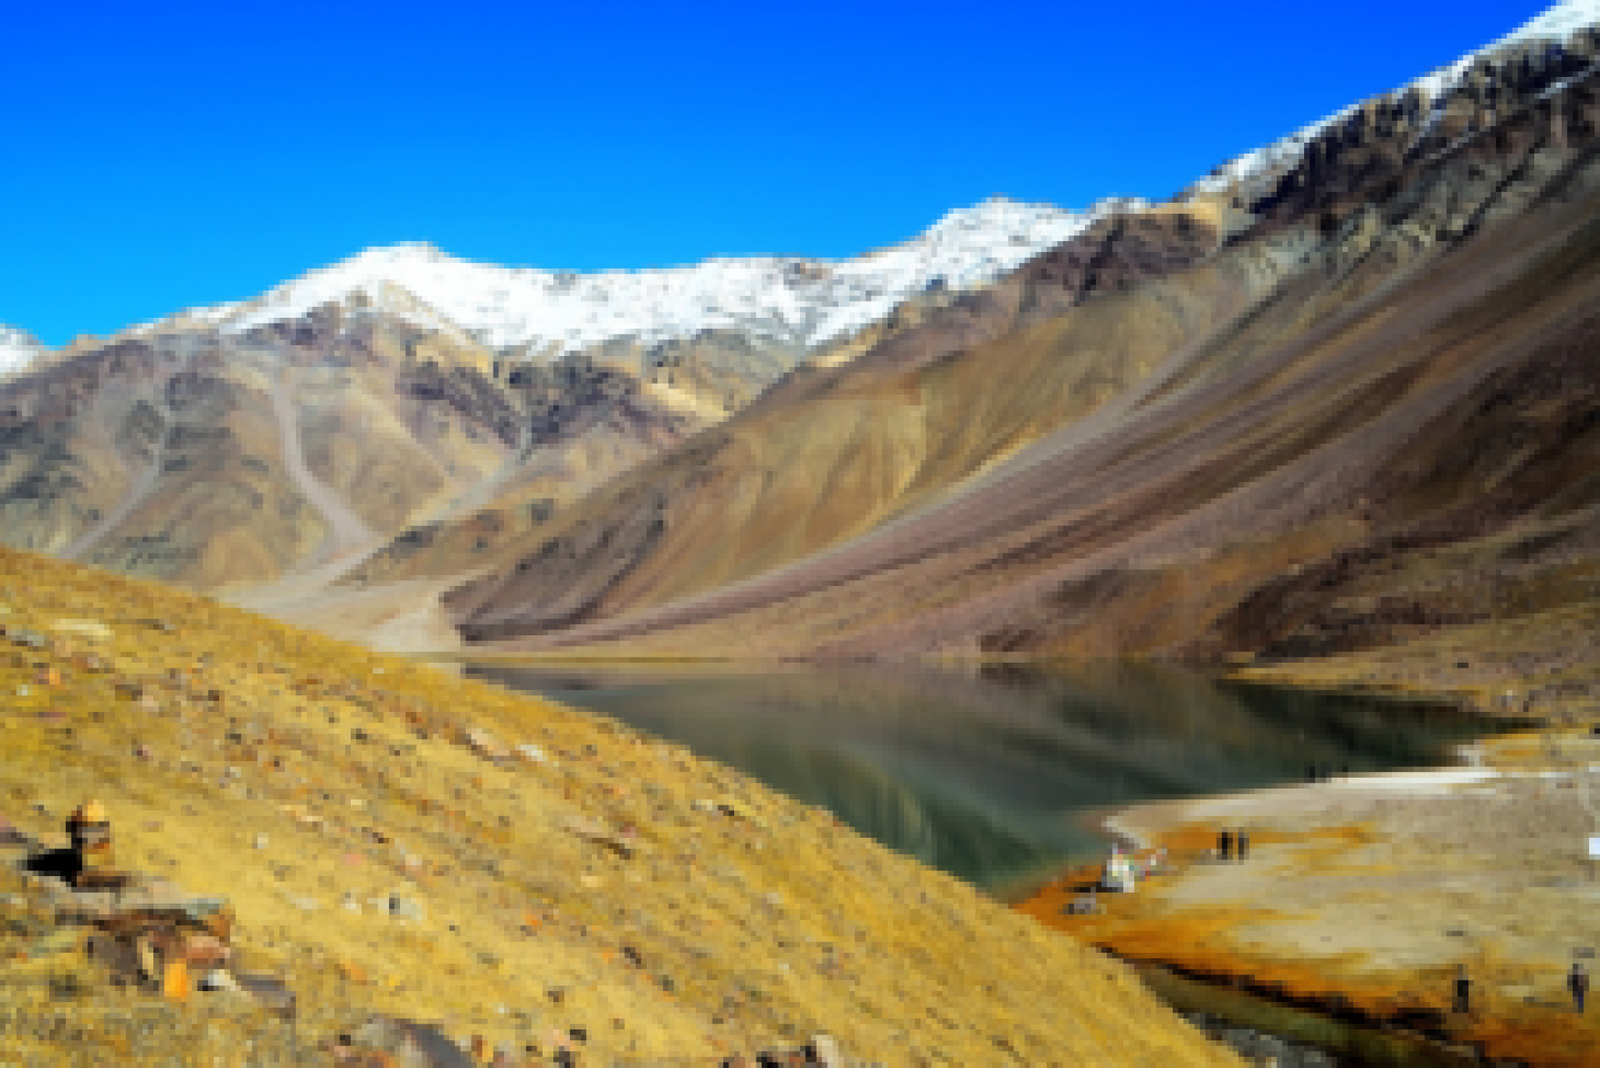 Places to visit in Himachal Pradesh